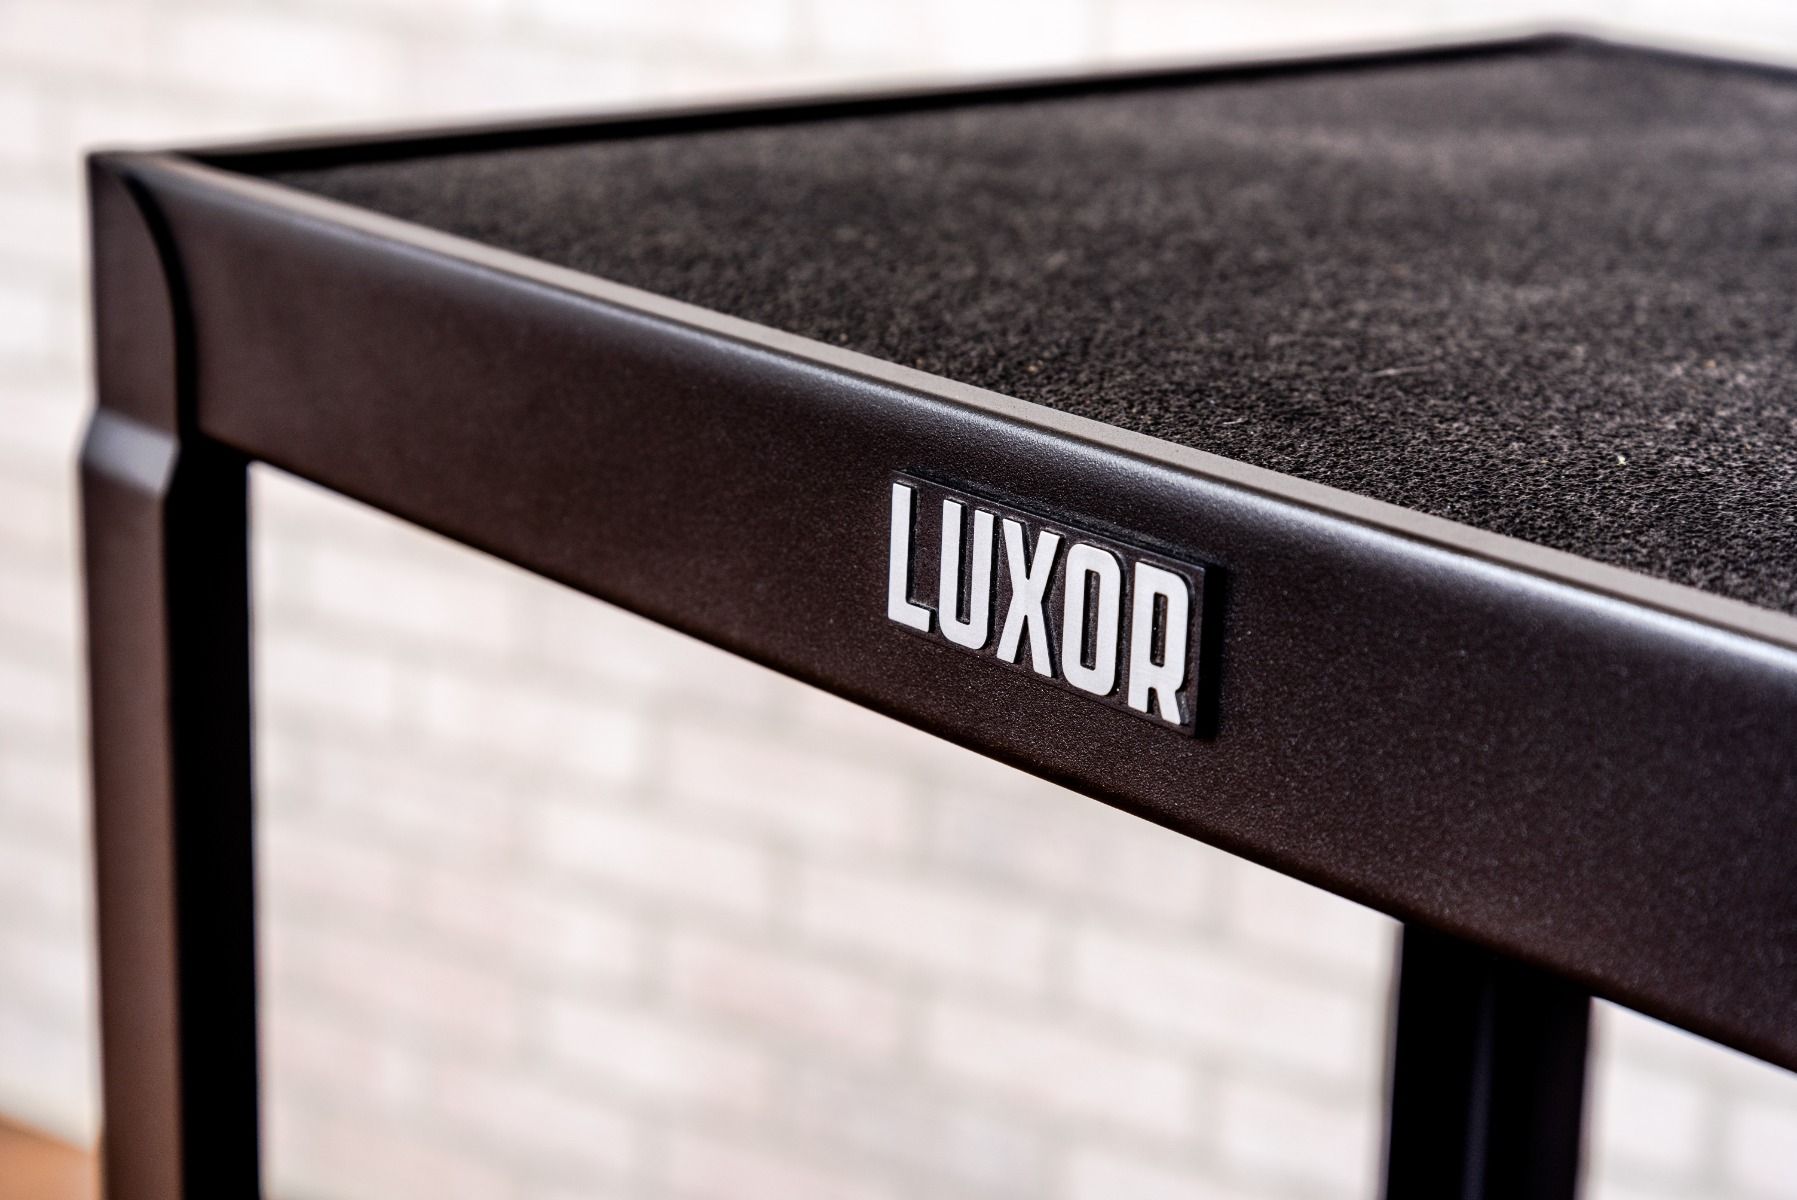 Luxor UCMT1 42" Adjustable-Height Steel Utility Cart - 3 shelves - SchoolOutlet